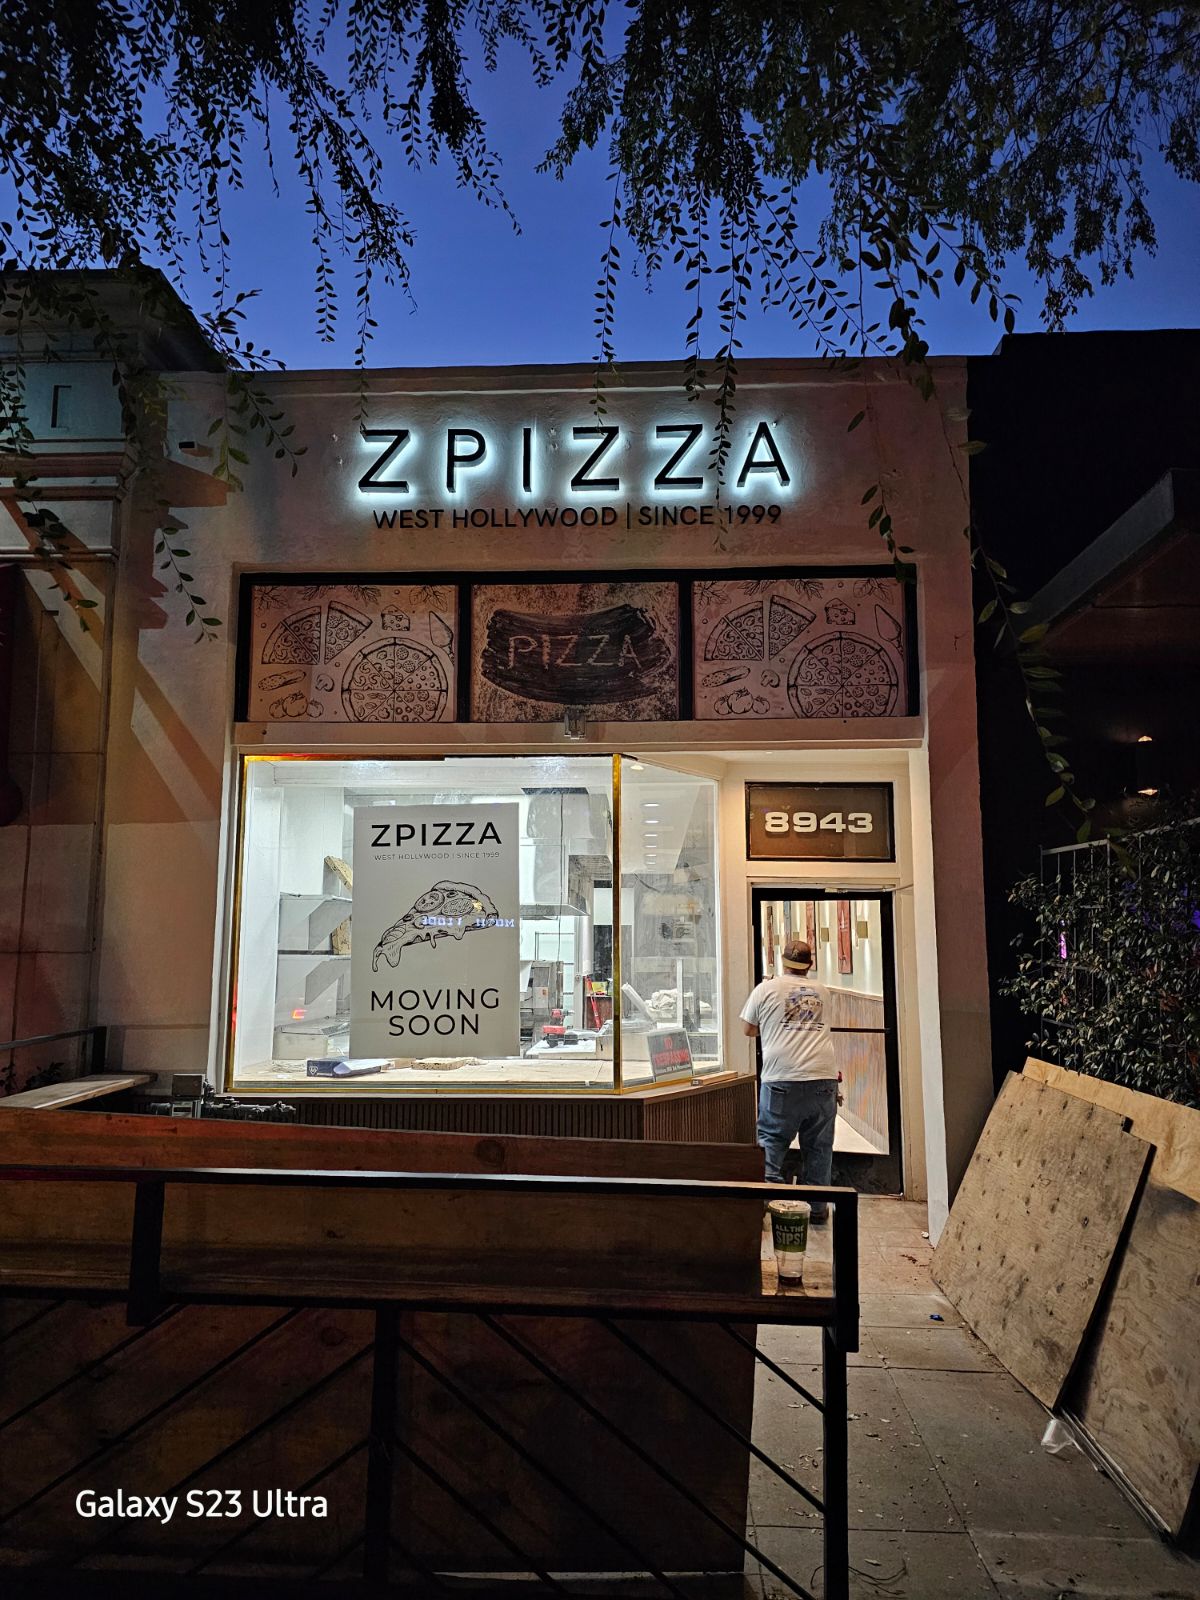 z-pizza-storefront-channel-letter-sign